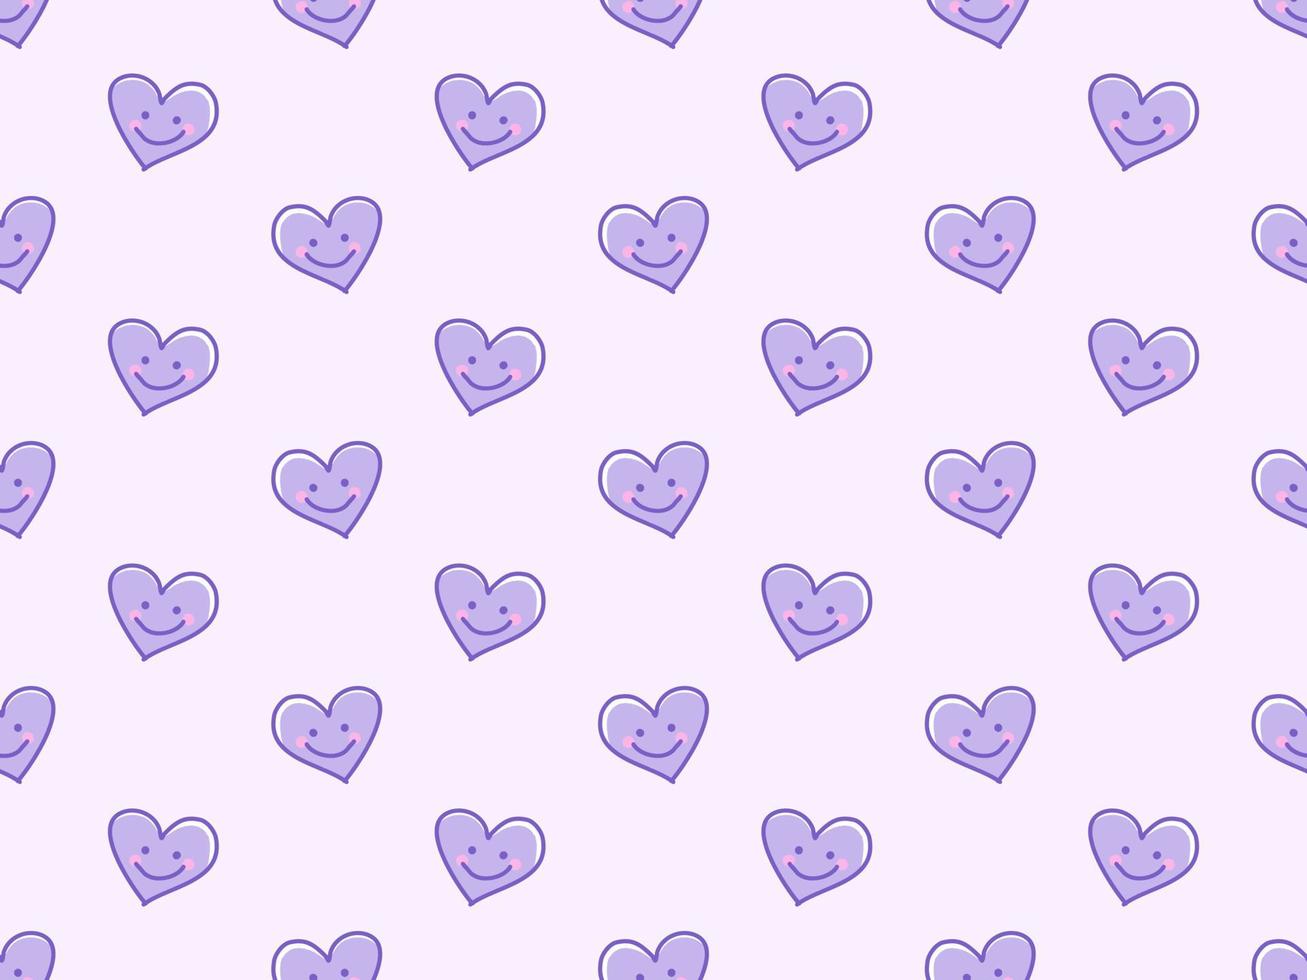 Heart cartoon character seamless pattern on purple background vector